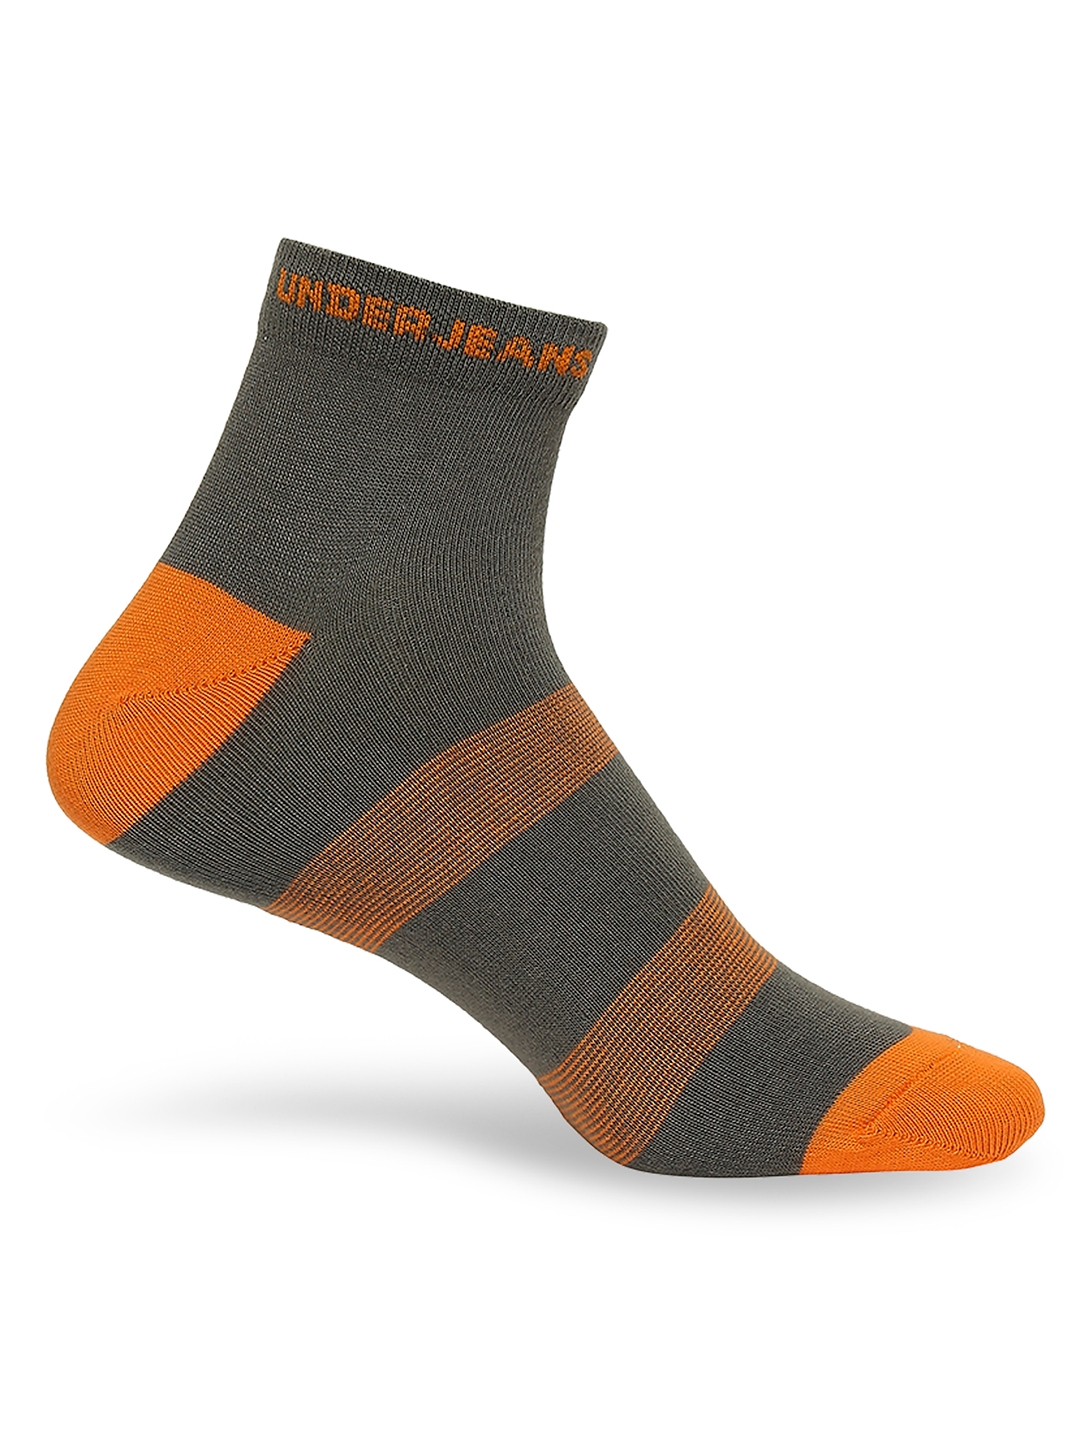 spykar | Underjeans by Spykar Premium Dark Grey & Navy Ankle Length Socks - Pack Of 2 2